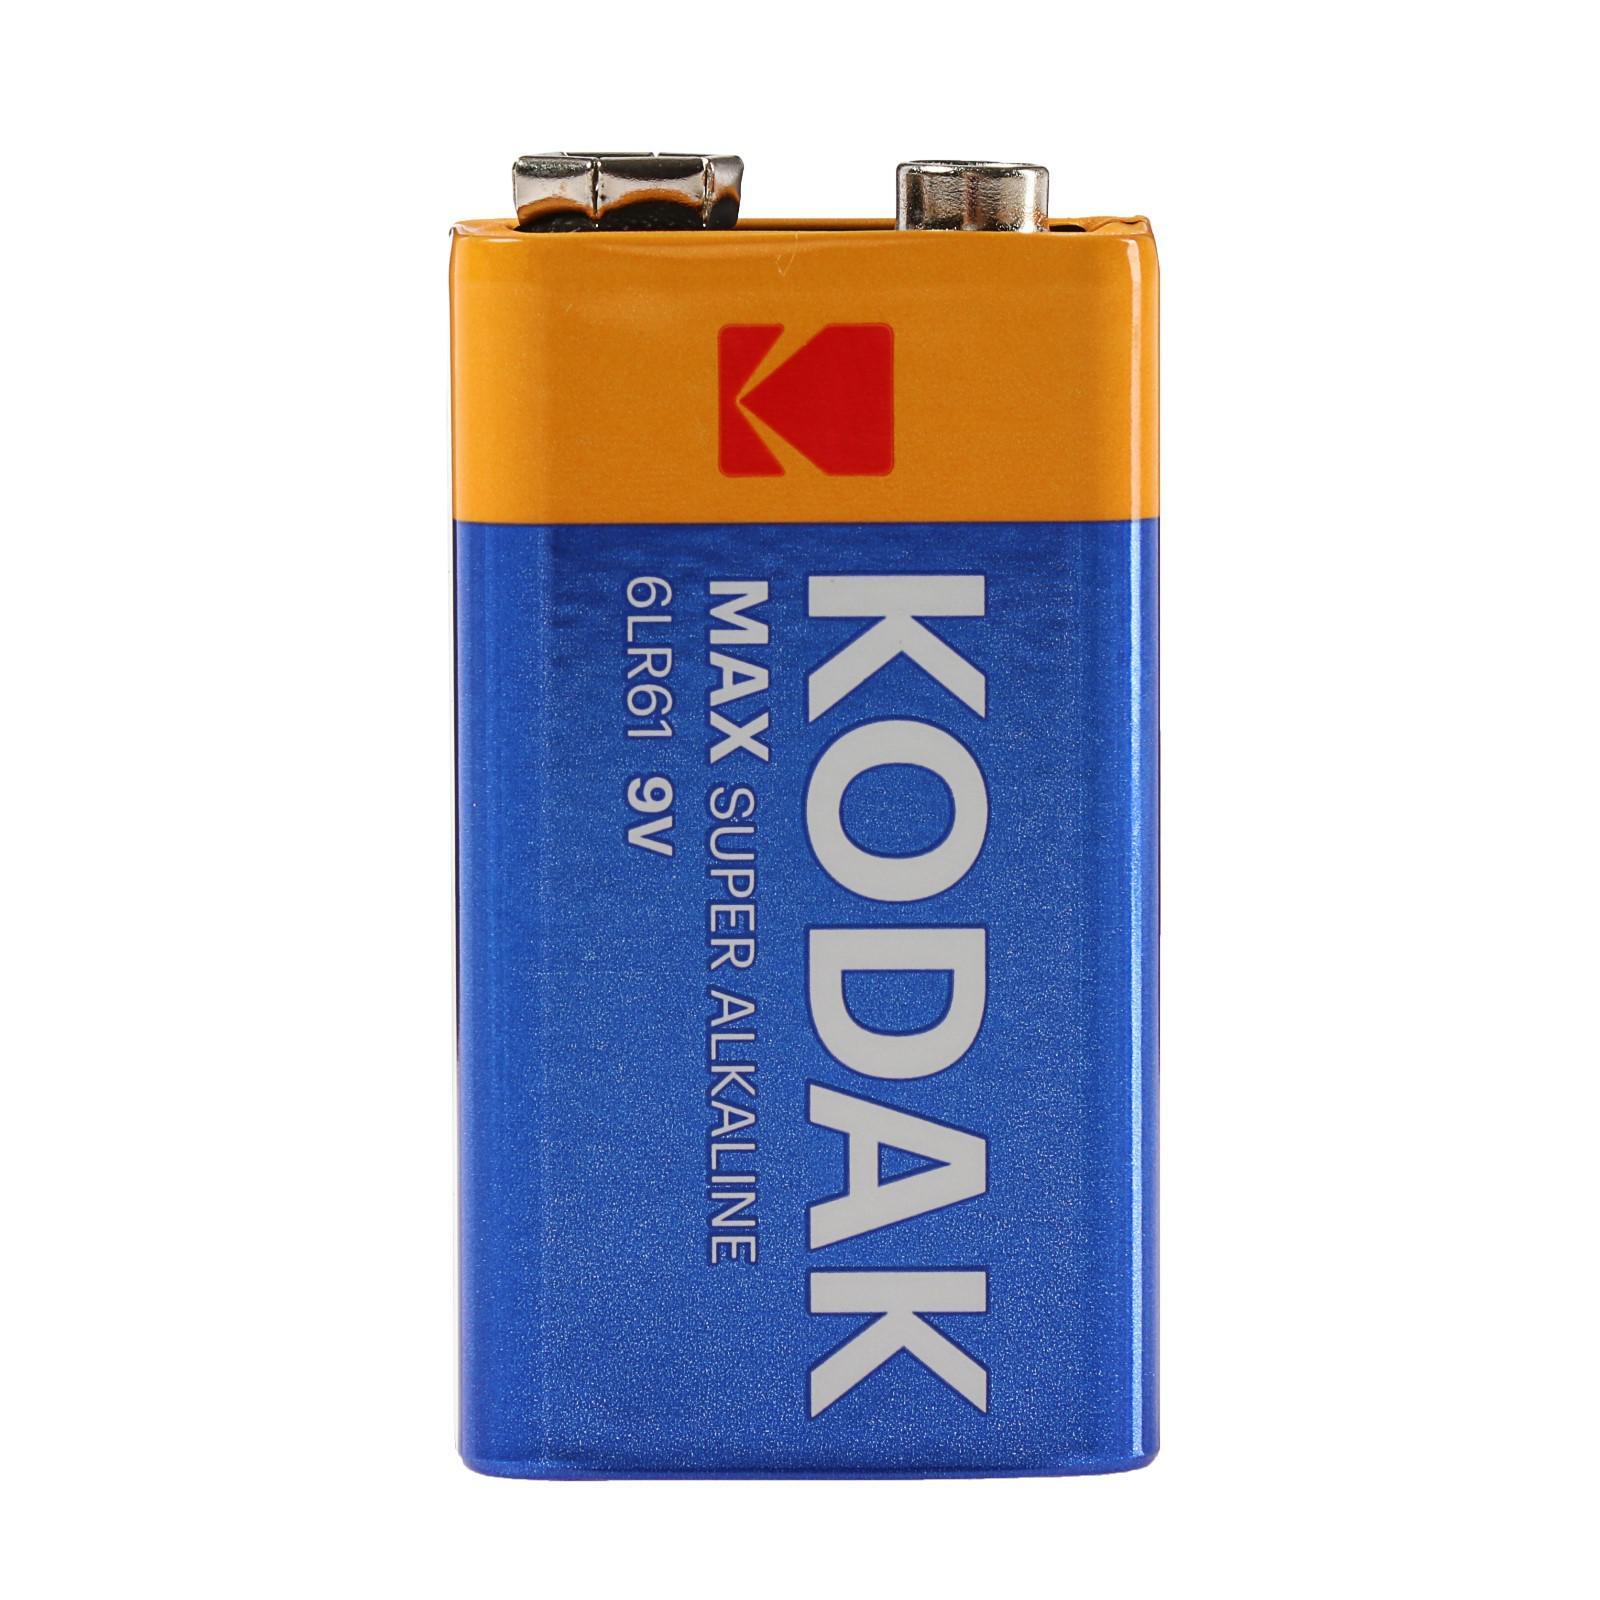 Батарейка ящеров. Батарейка 9v (крона) Kodak 6lr61 Max (1-BL) (10/200). Батарейки Kodak крона Max 9v (2025). Батарейка батарейка щелочная Kodak 6lr61 1шт батарейка, щелочная (Alkaline). Батарейка крона Kodak lr61-1bl, Max Alkaline.